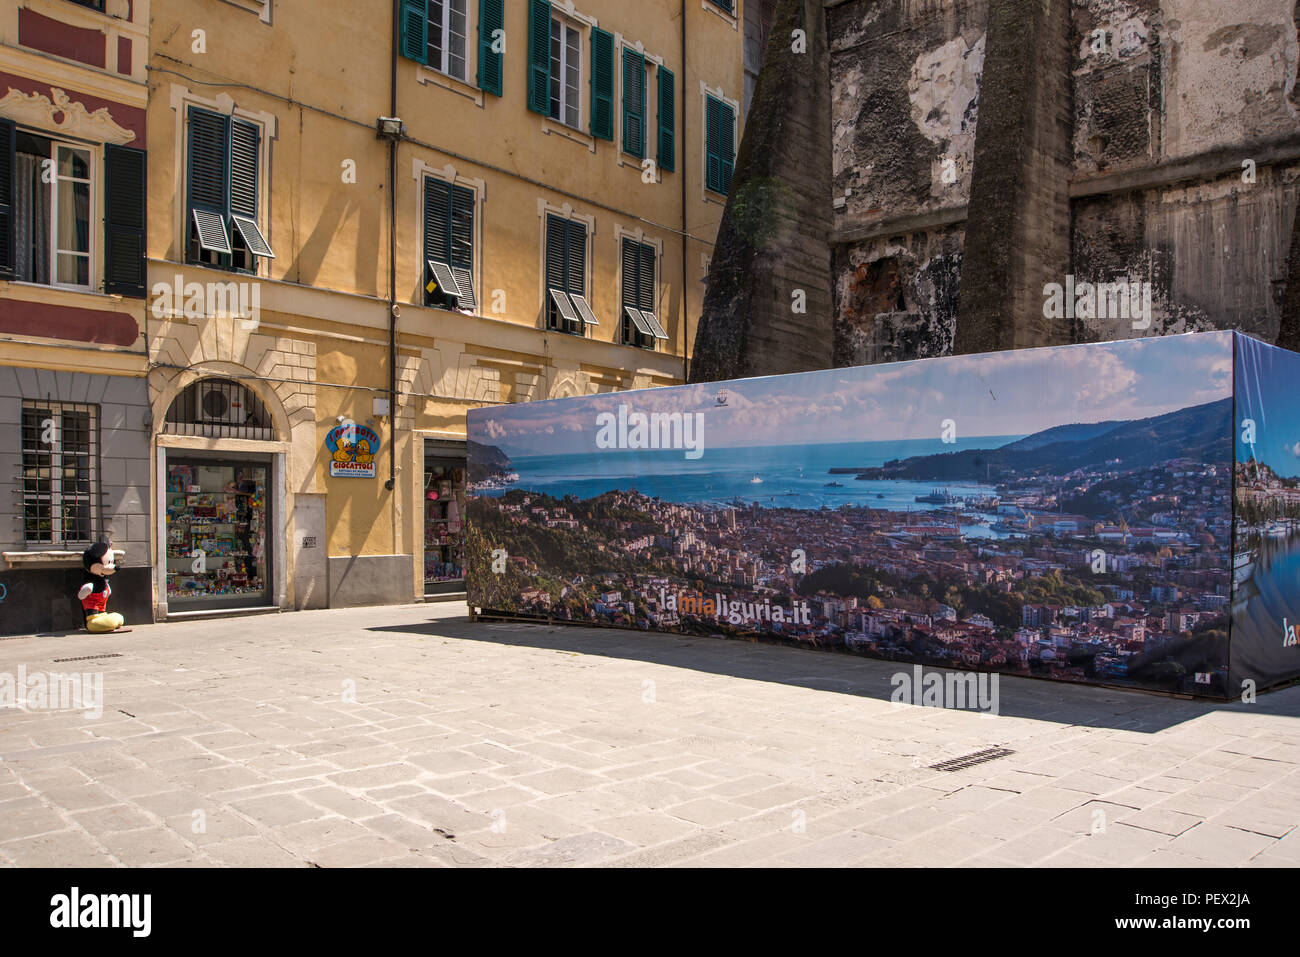 A billboard promoting tourism in Liguria region installed in the street of La Spezia, Liguria, Italy Stock Photo